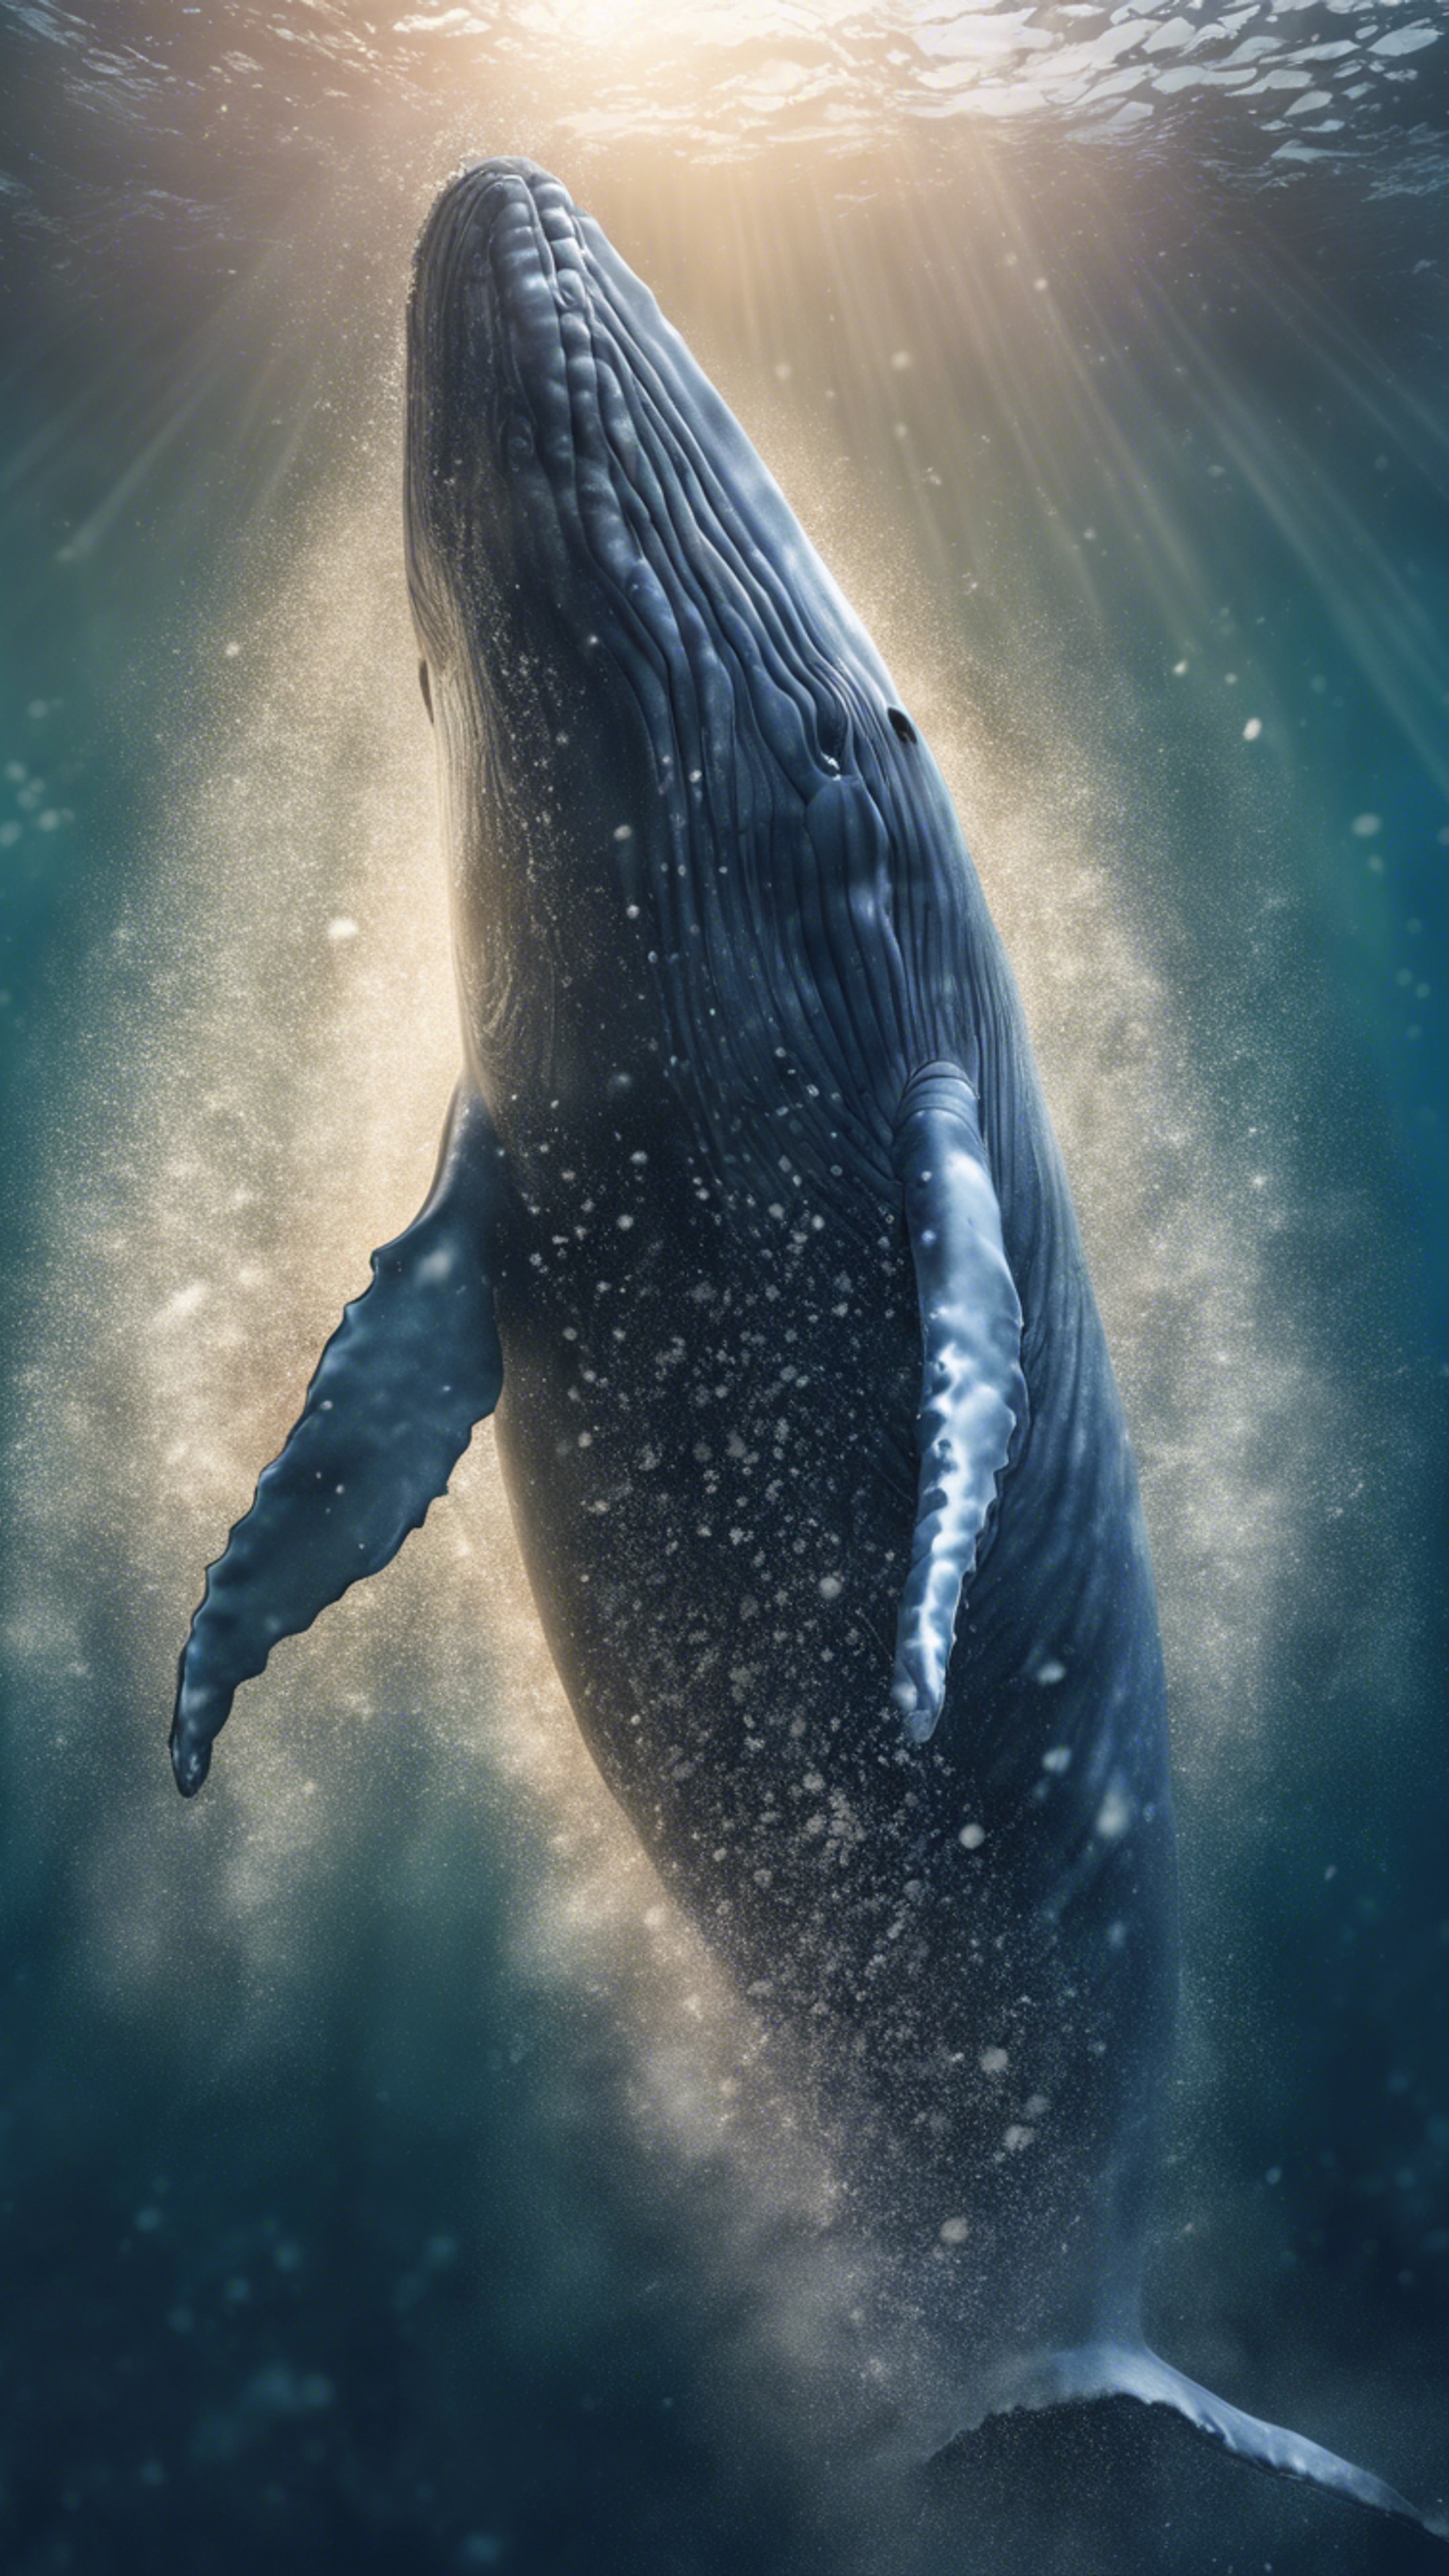 A digital portrait of a majestic sperm whale deep below the ocean waves. Wallpaper[e5d10afbe32a416ca5b5]